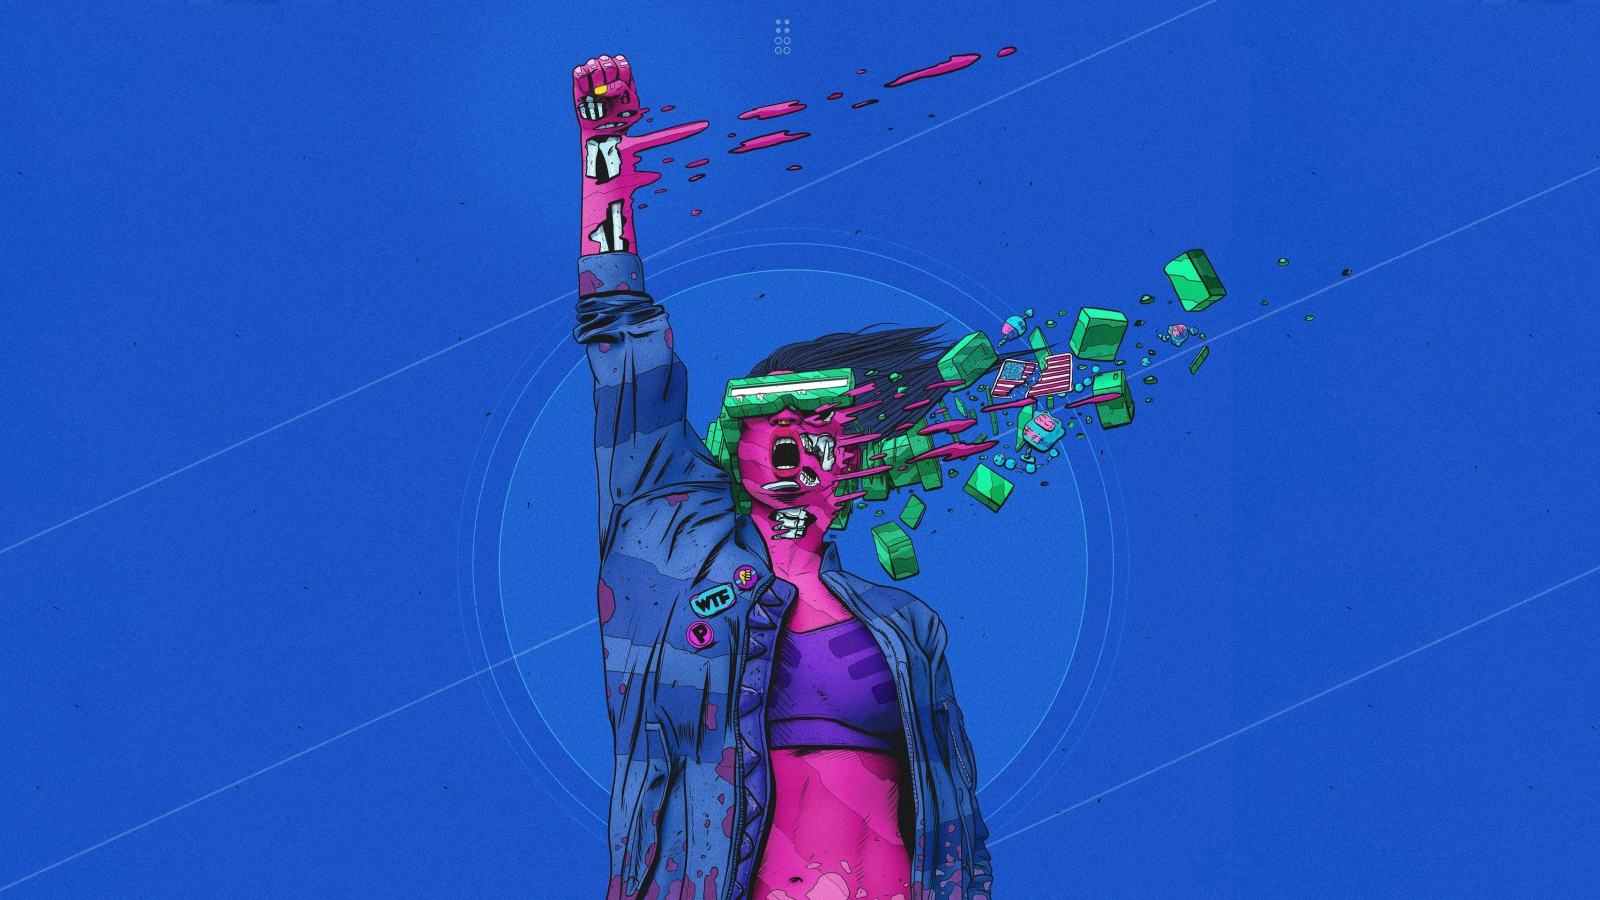 Download wallpaper x girl cyborg surreal art widescreen x hd background